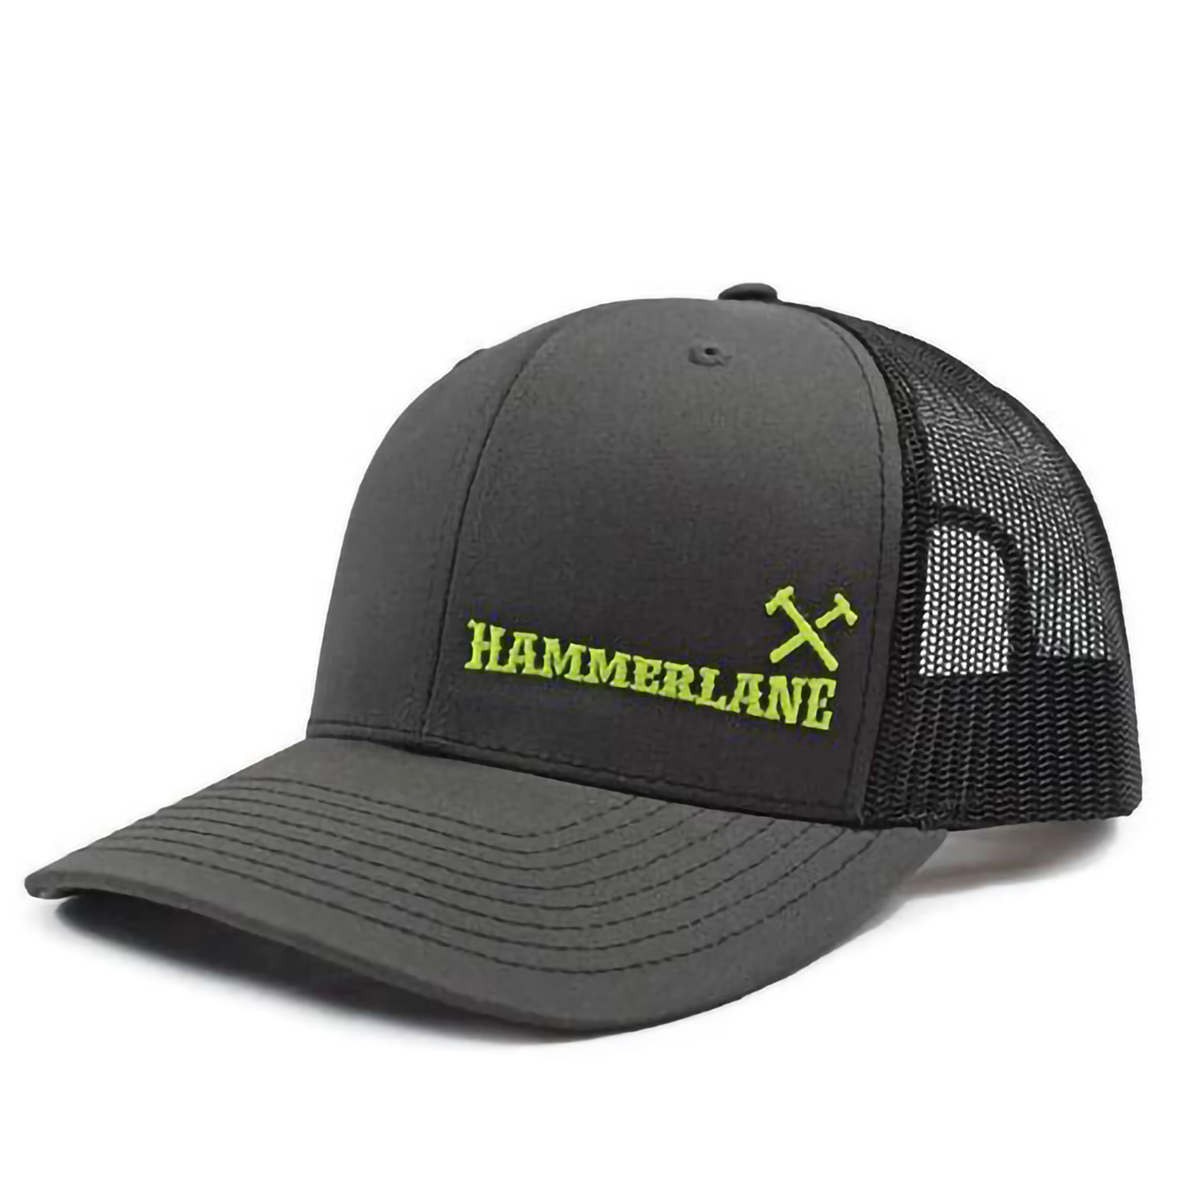 Hammerlane Cross Hammers Cap Ch/Black Neon